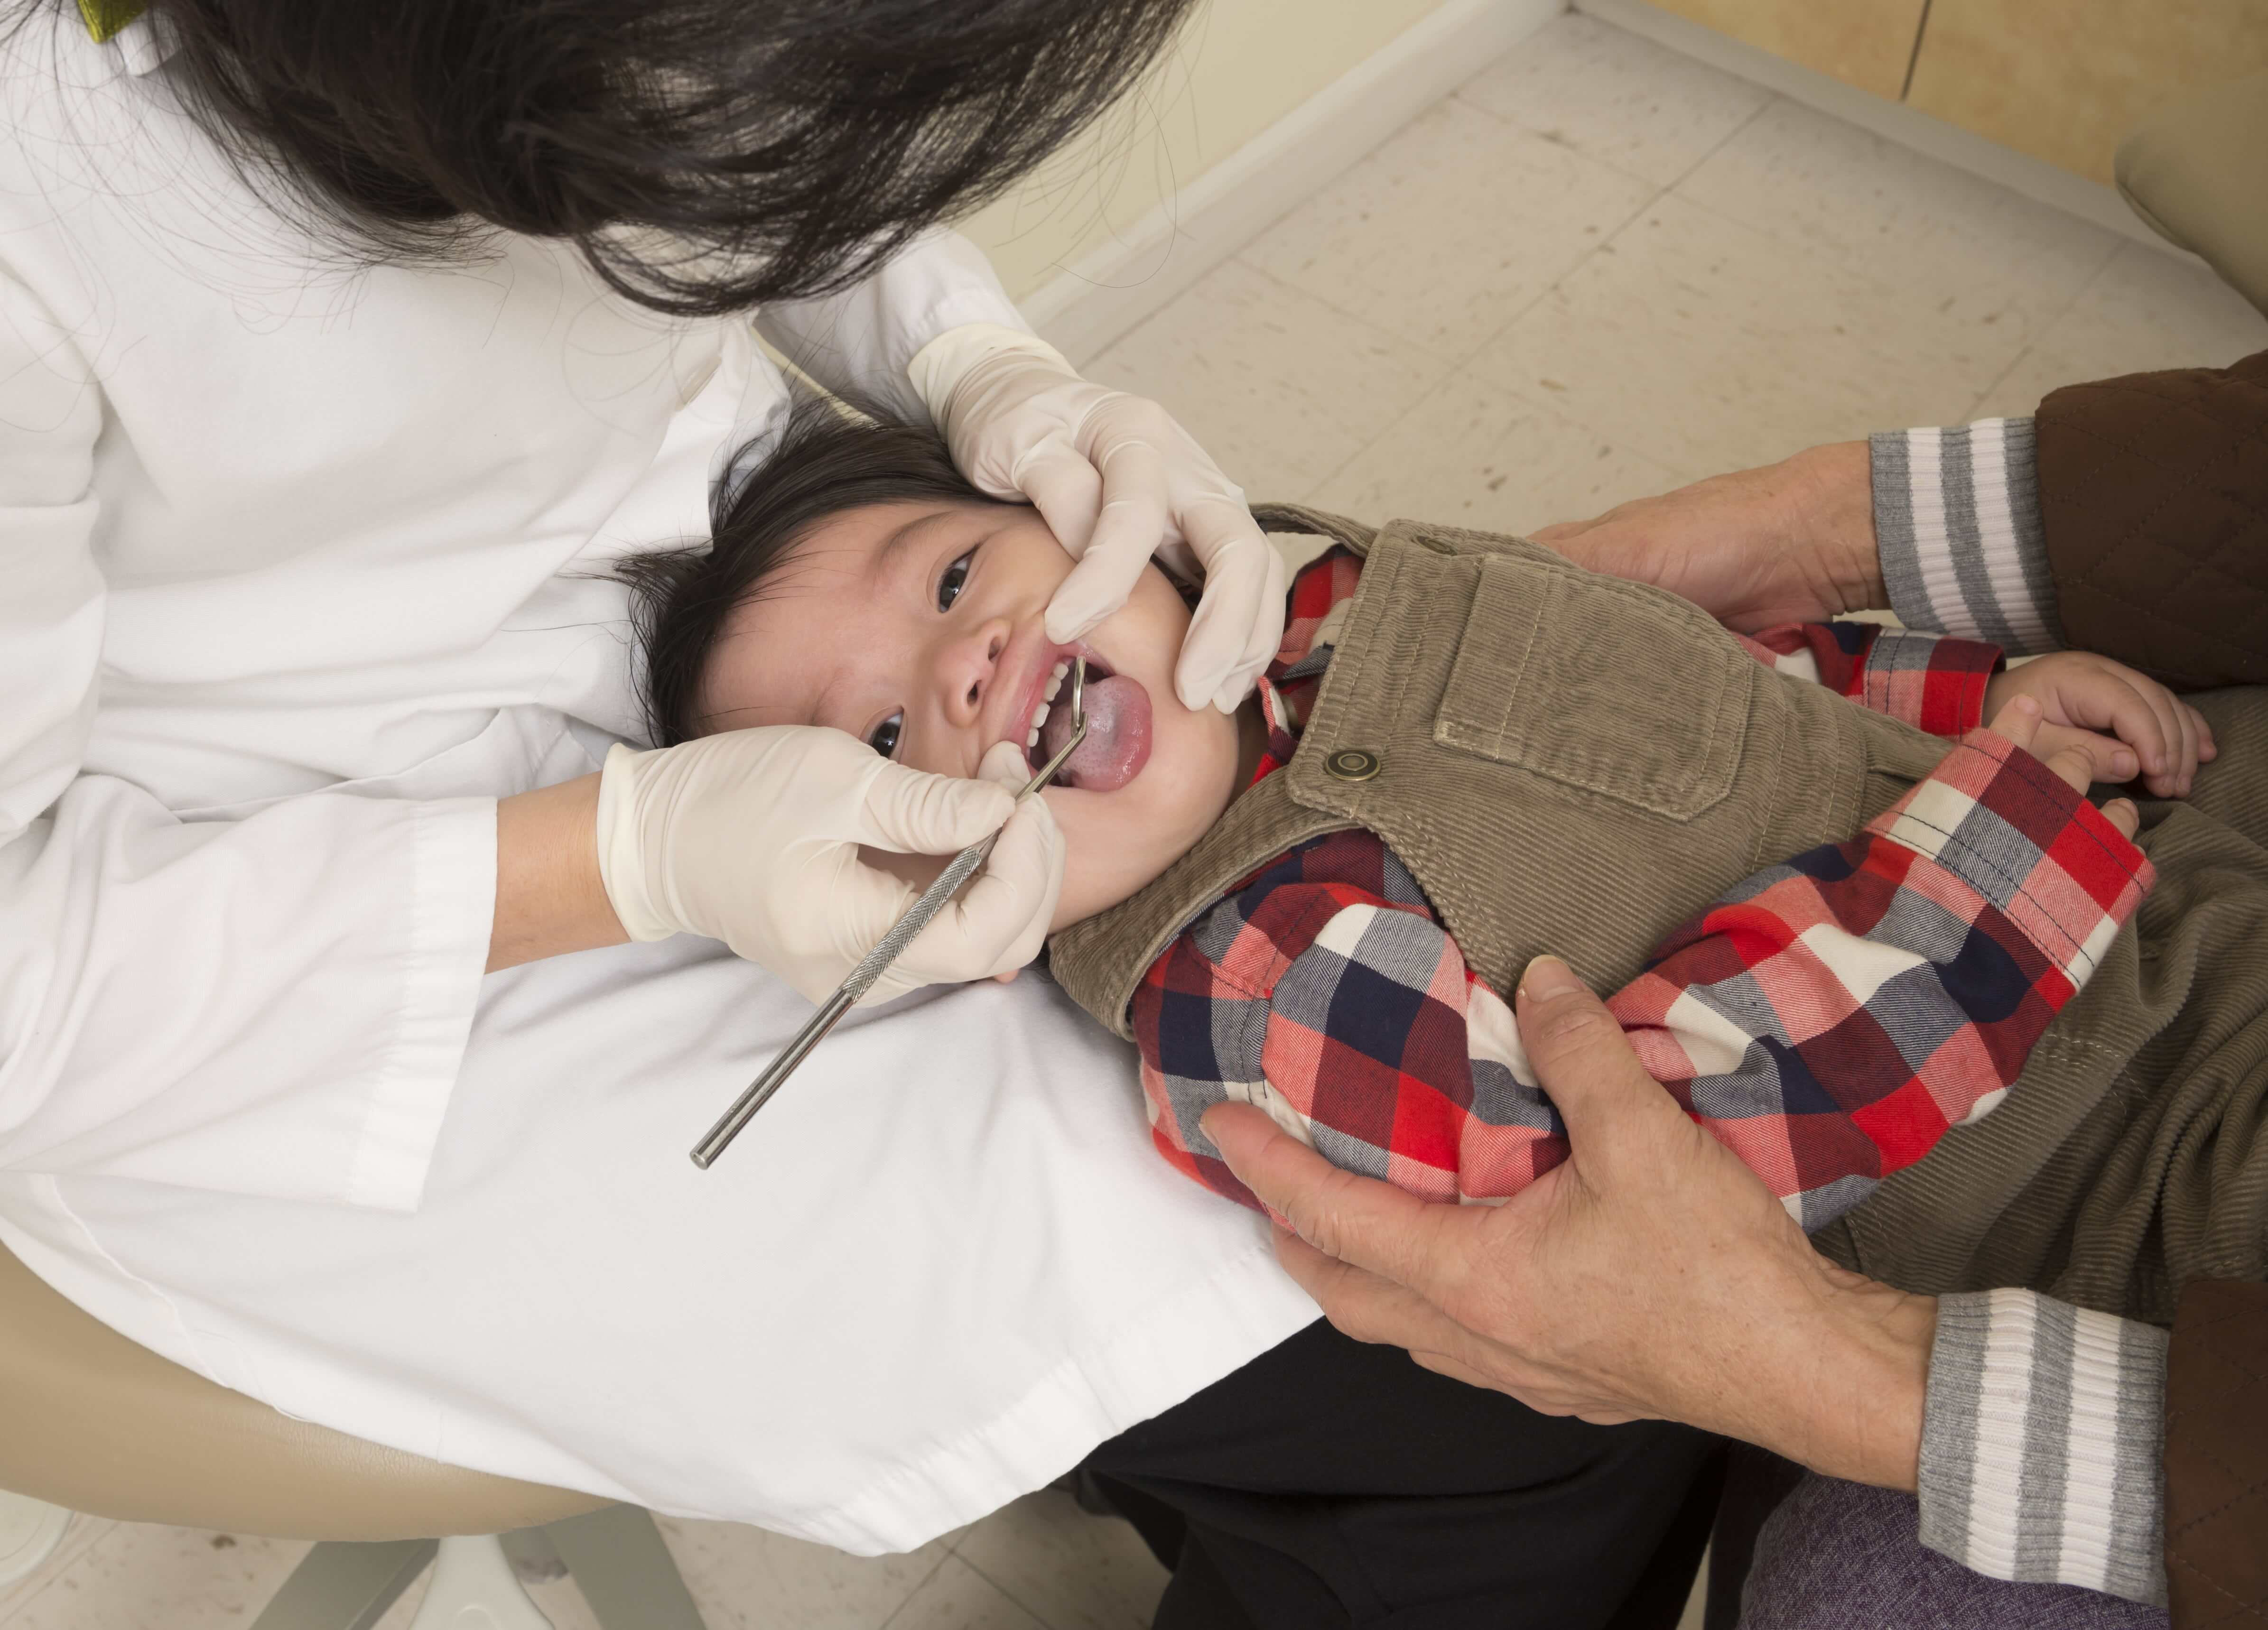 childrens-dental-care-tips-park-dental